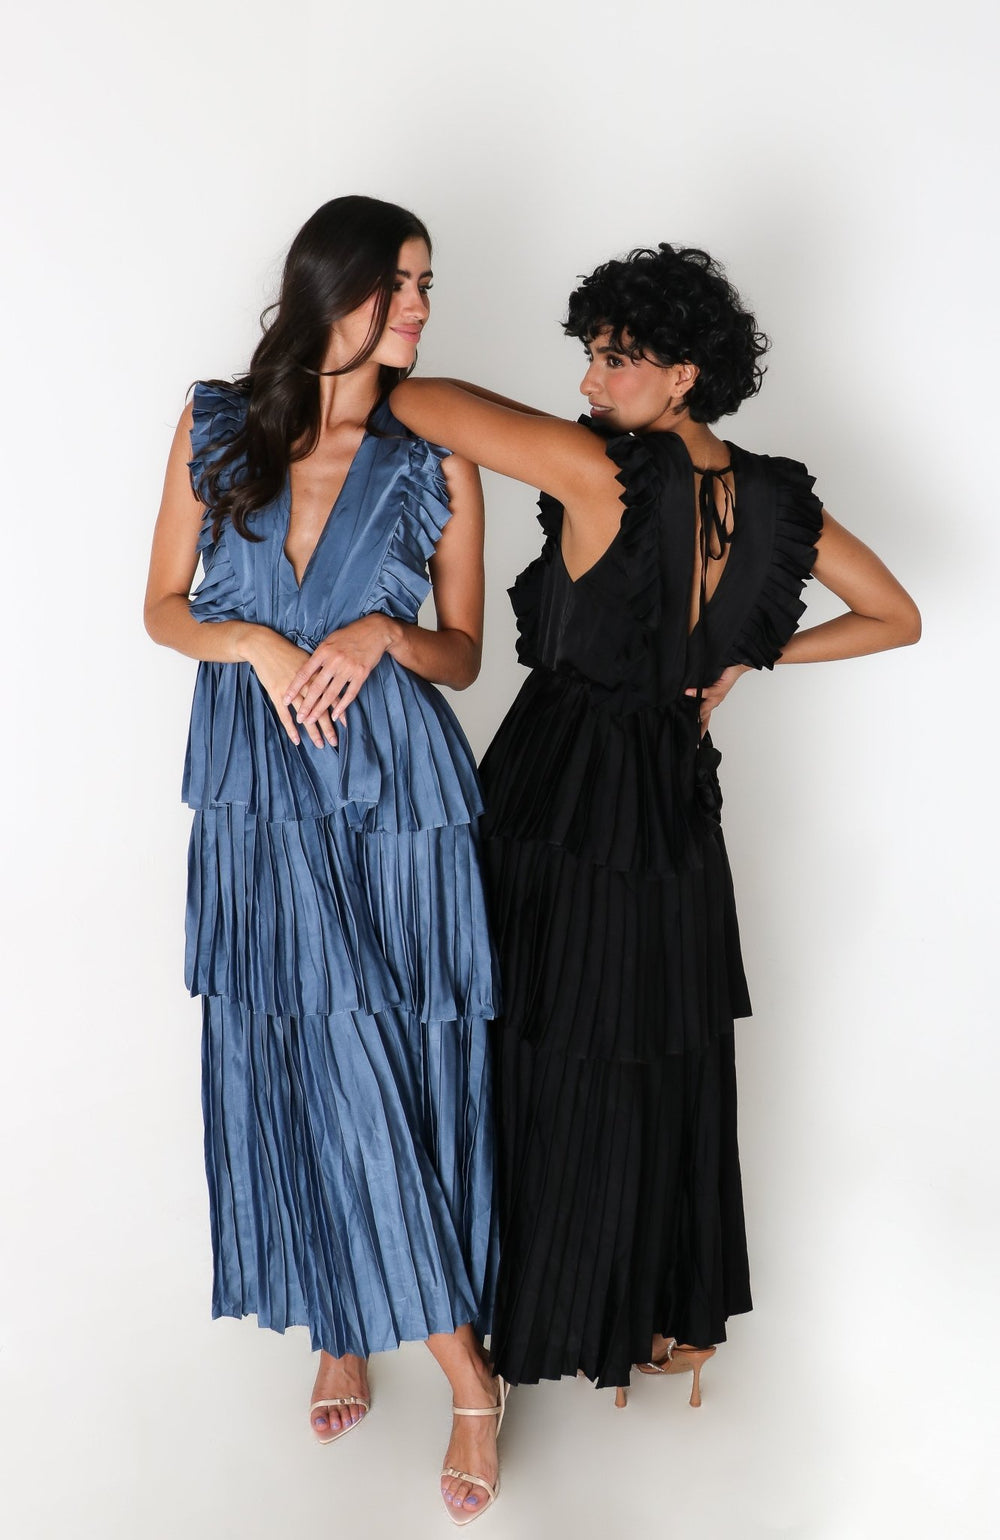 Diora - negro - Lend the Trend renta de vestidos mexico